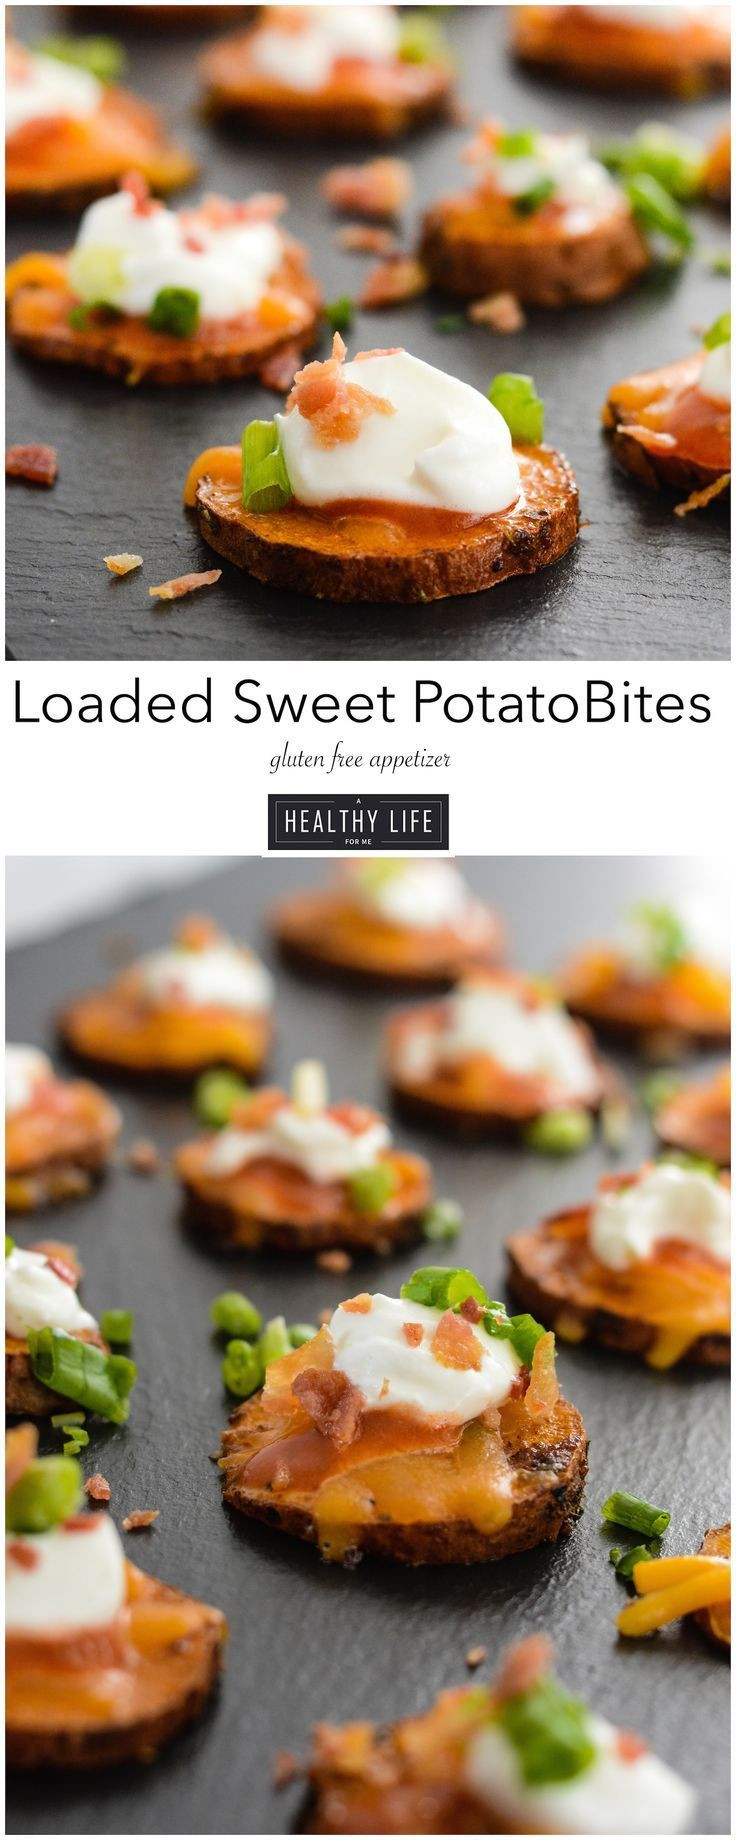 Best Appetizers For Thanksgiving
 Loaded Sweet Potato Bites Recipe